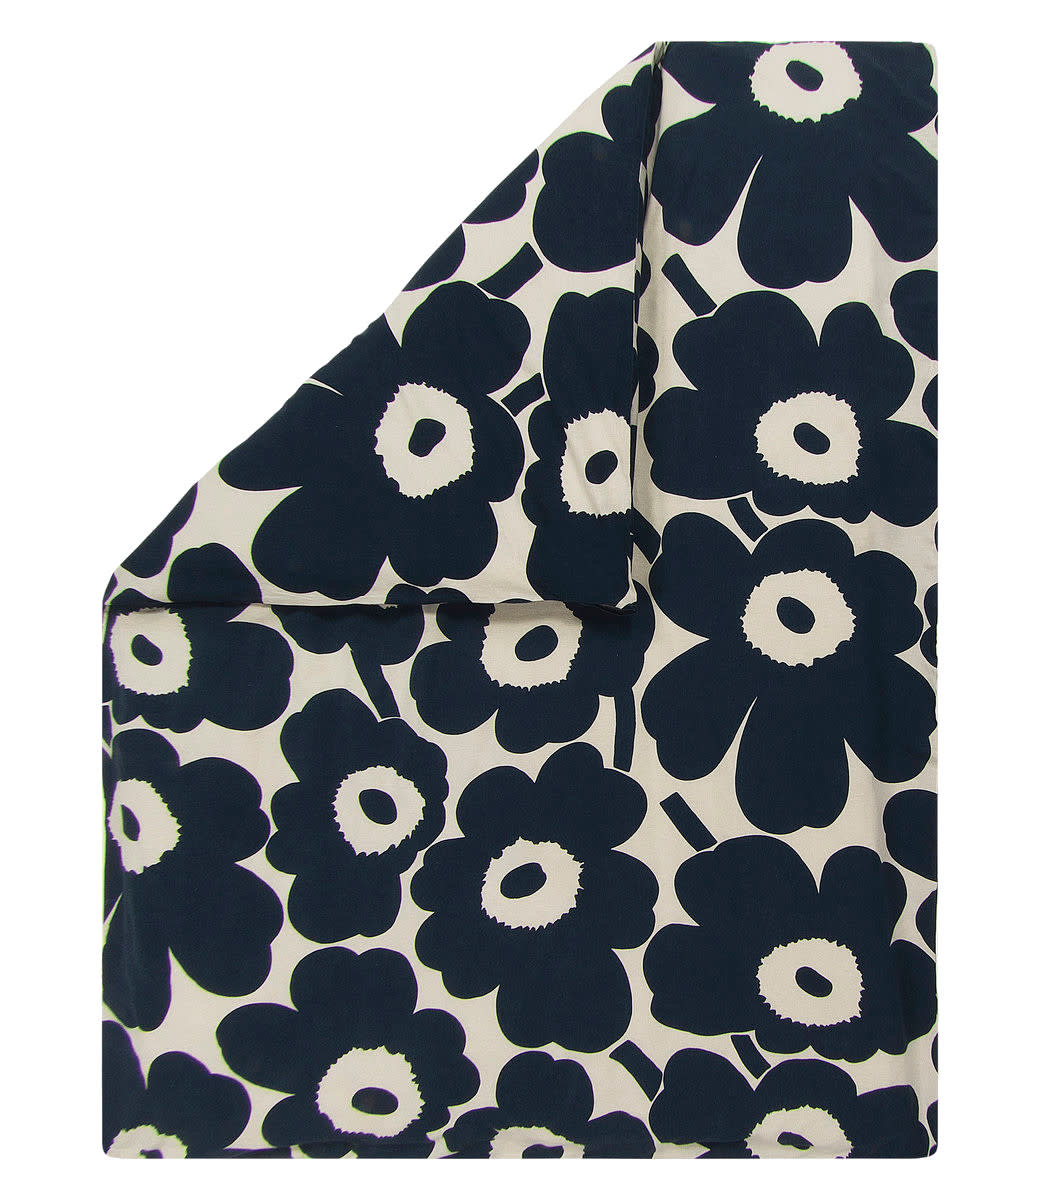 Marimekko bed textiles - Marimekko duvet covers - Finnish Design! - blikfang